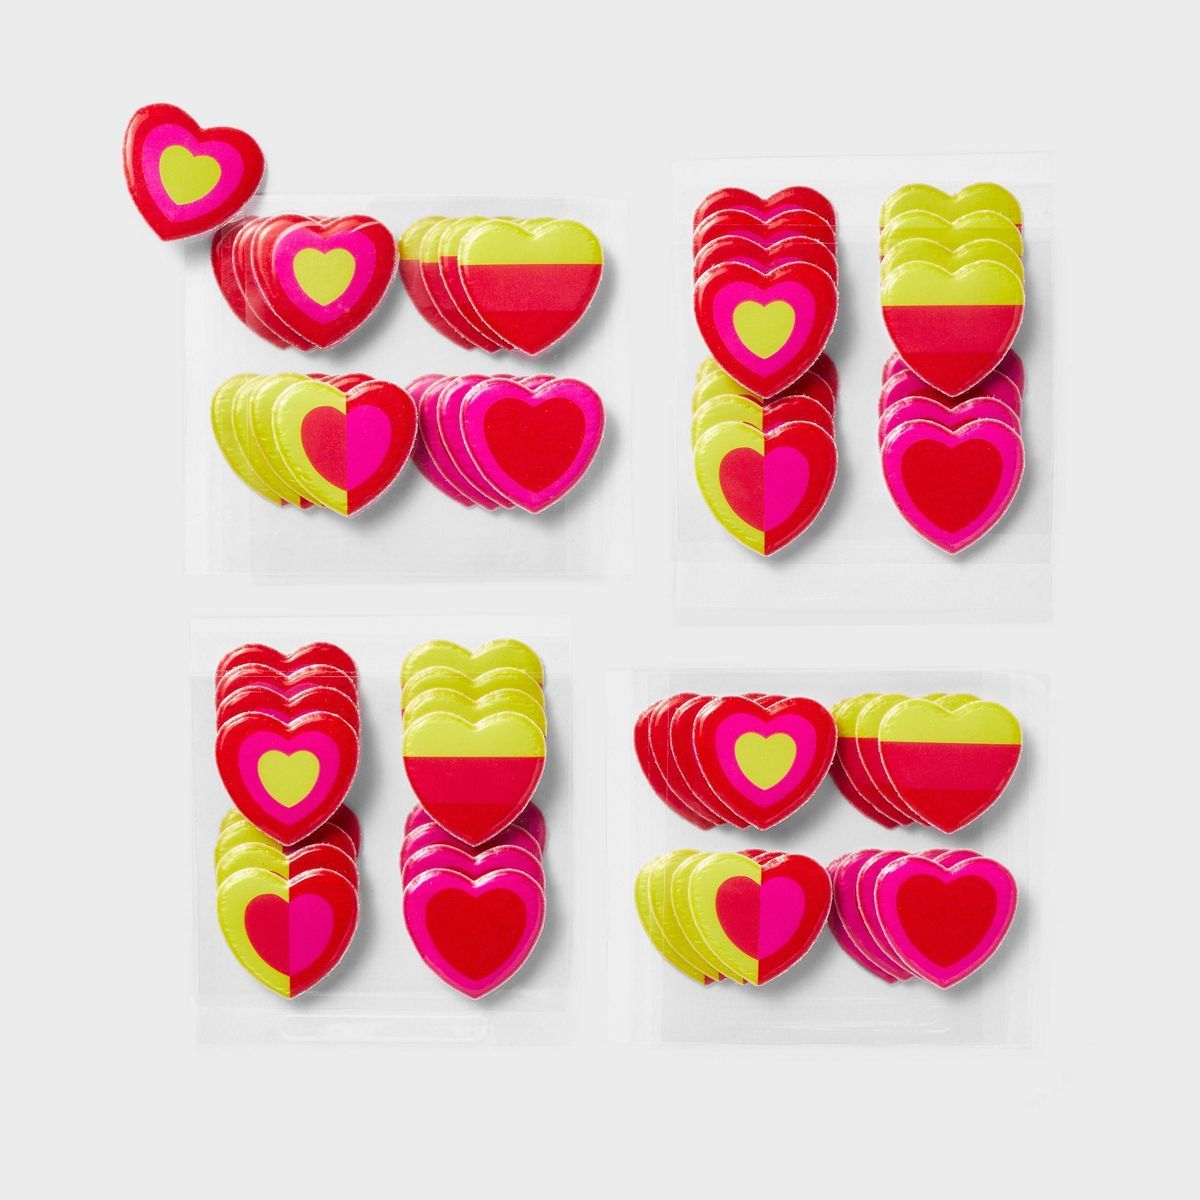 16ct Valentine's Giveaways Deluxe Heart Sticker - Spritz™ | Target